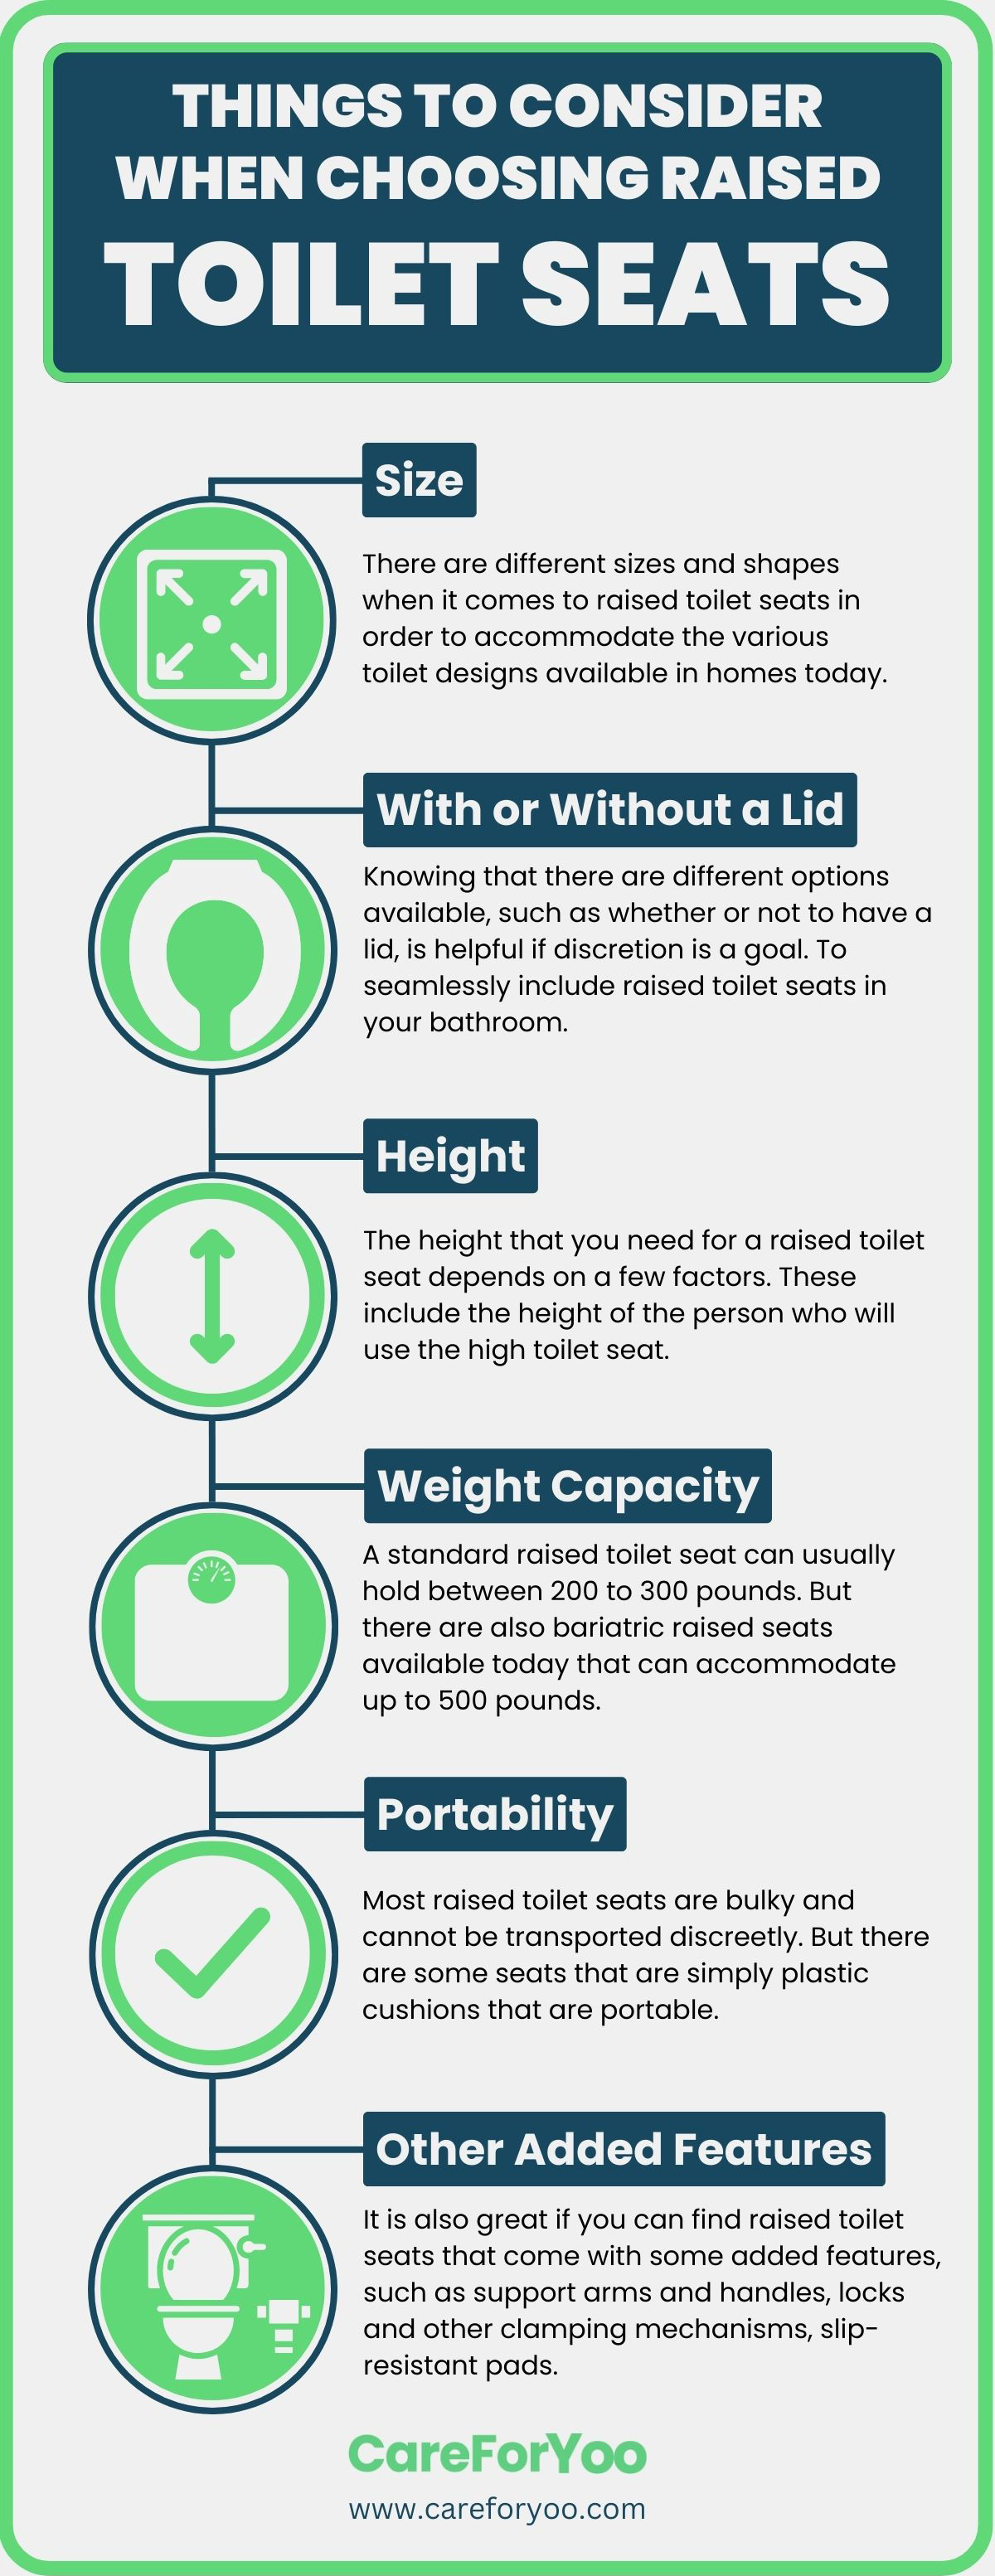 Things to Consider When Choosing Raised Toilet Seats